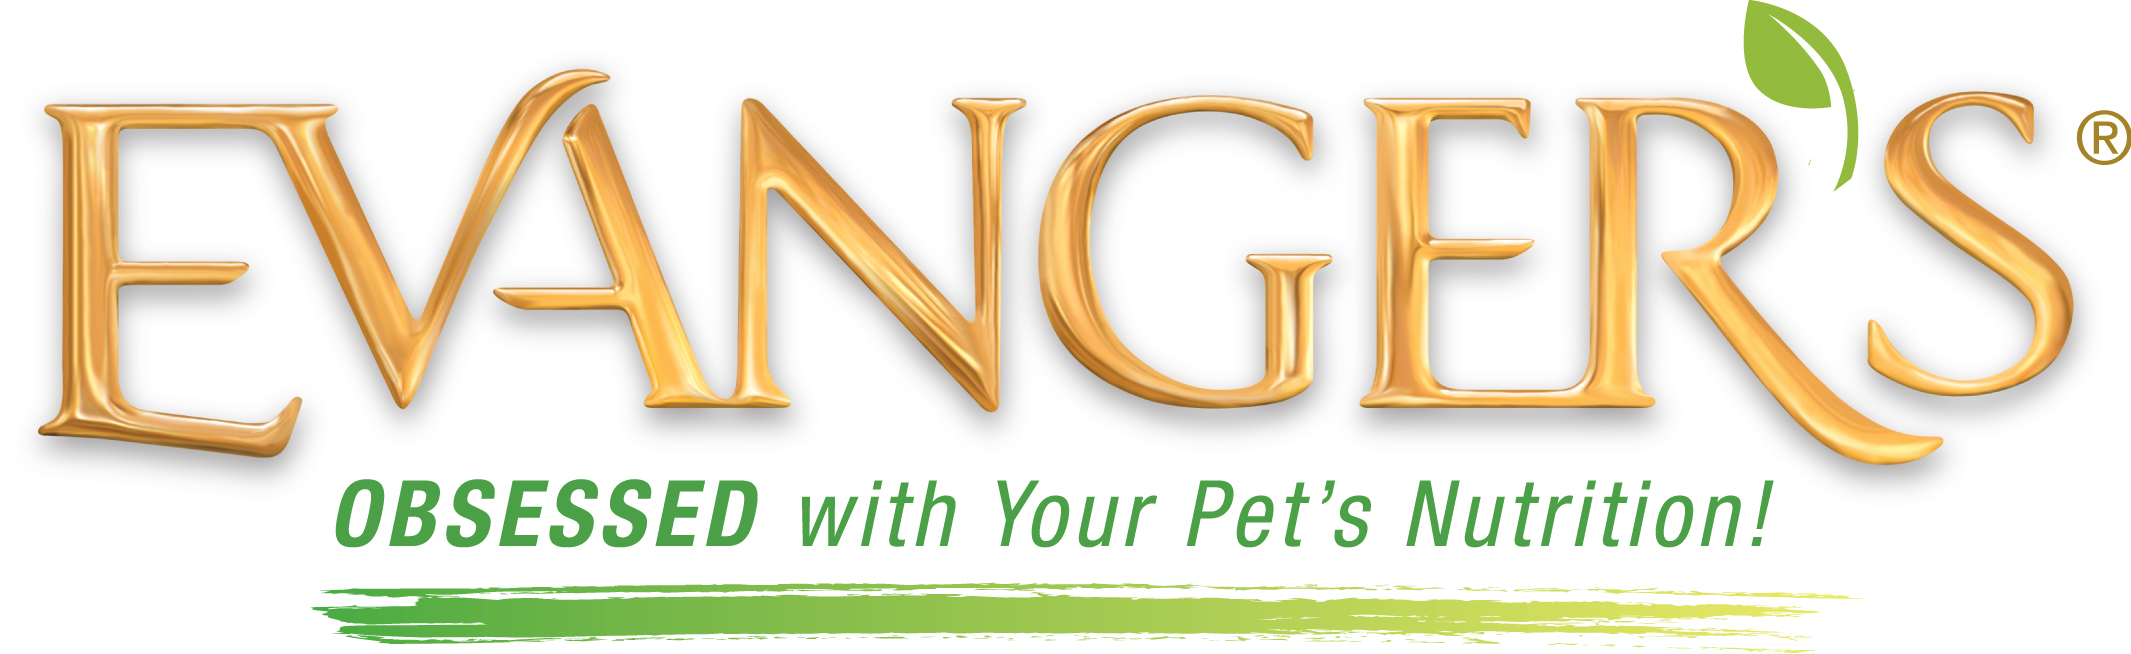 Evangers Pet Food Logo Image